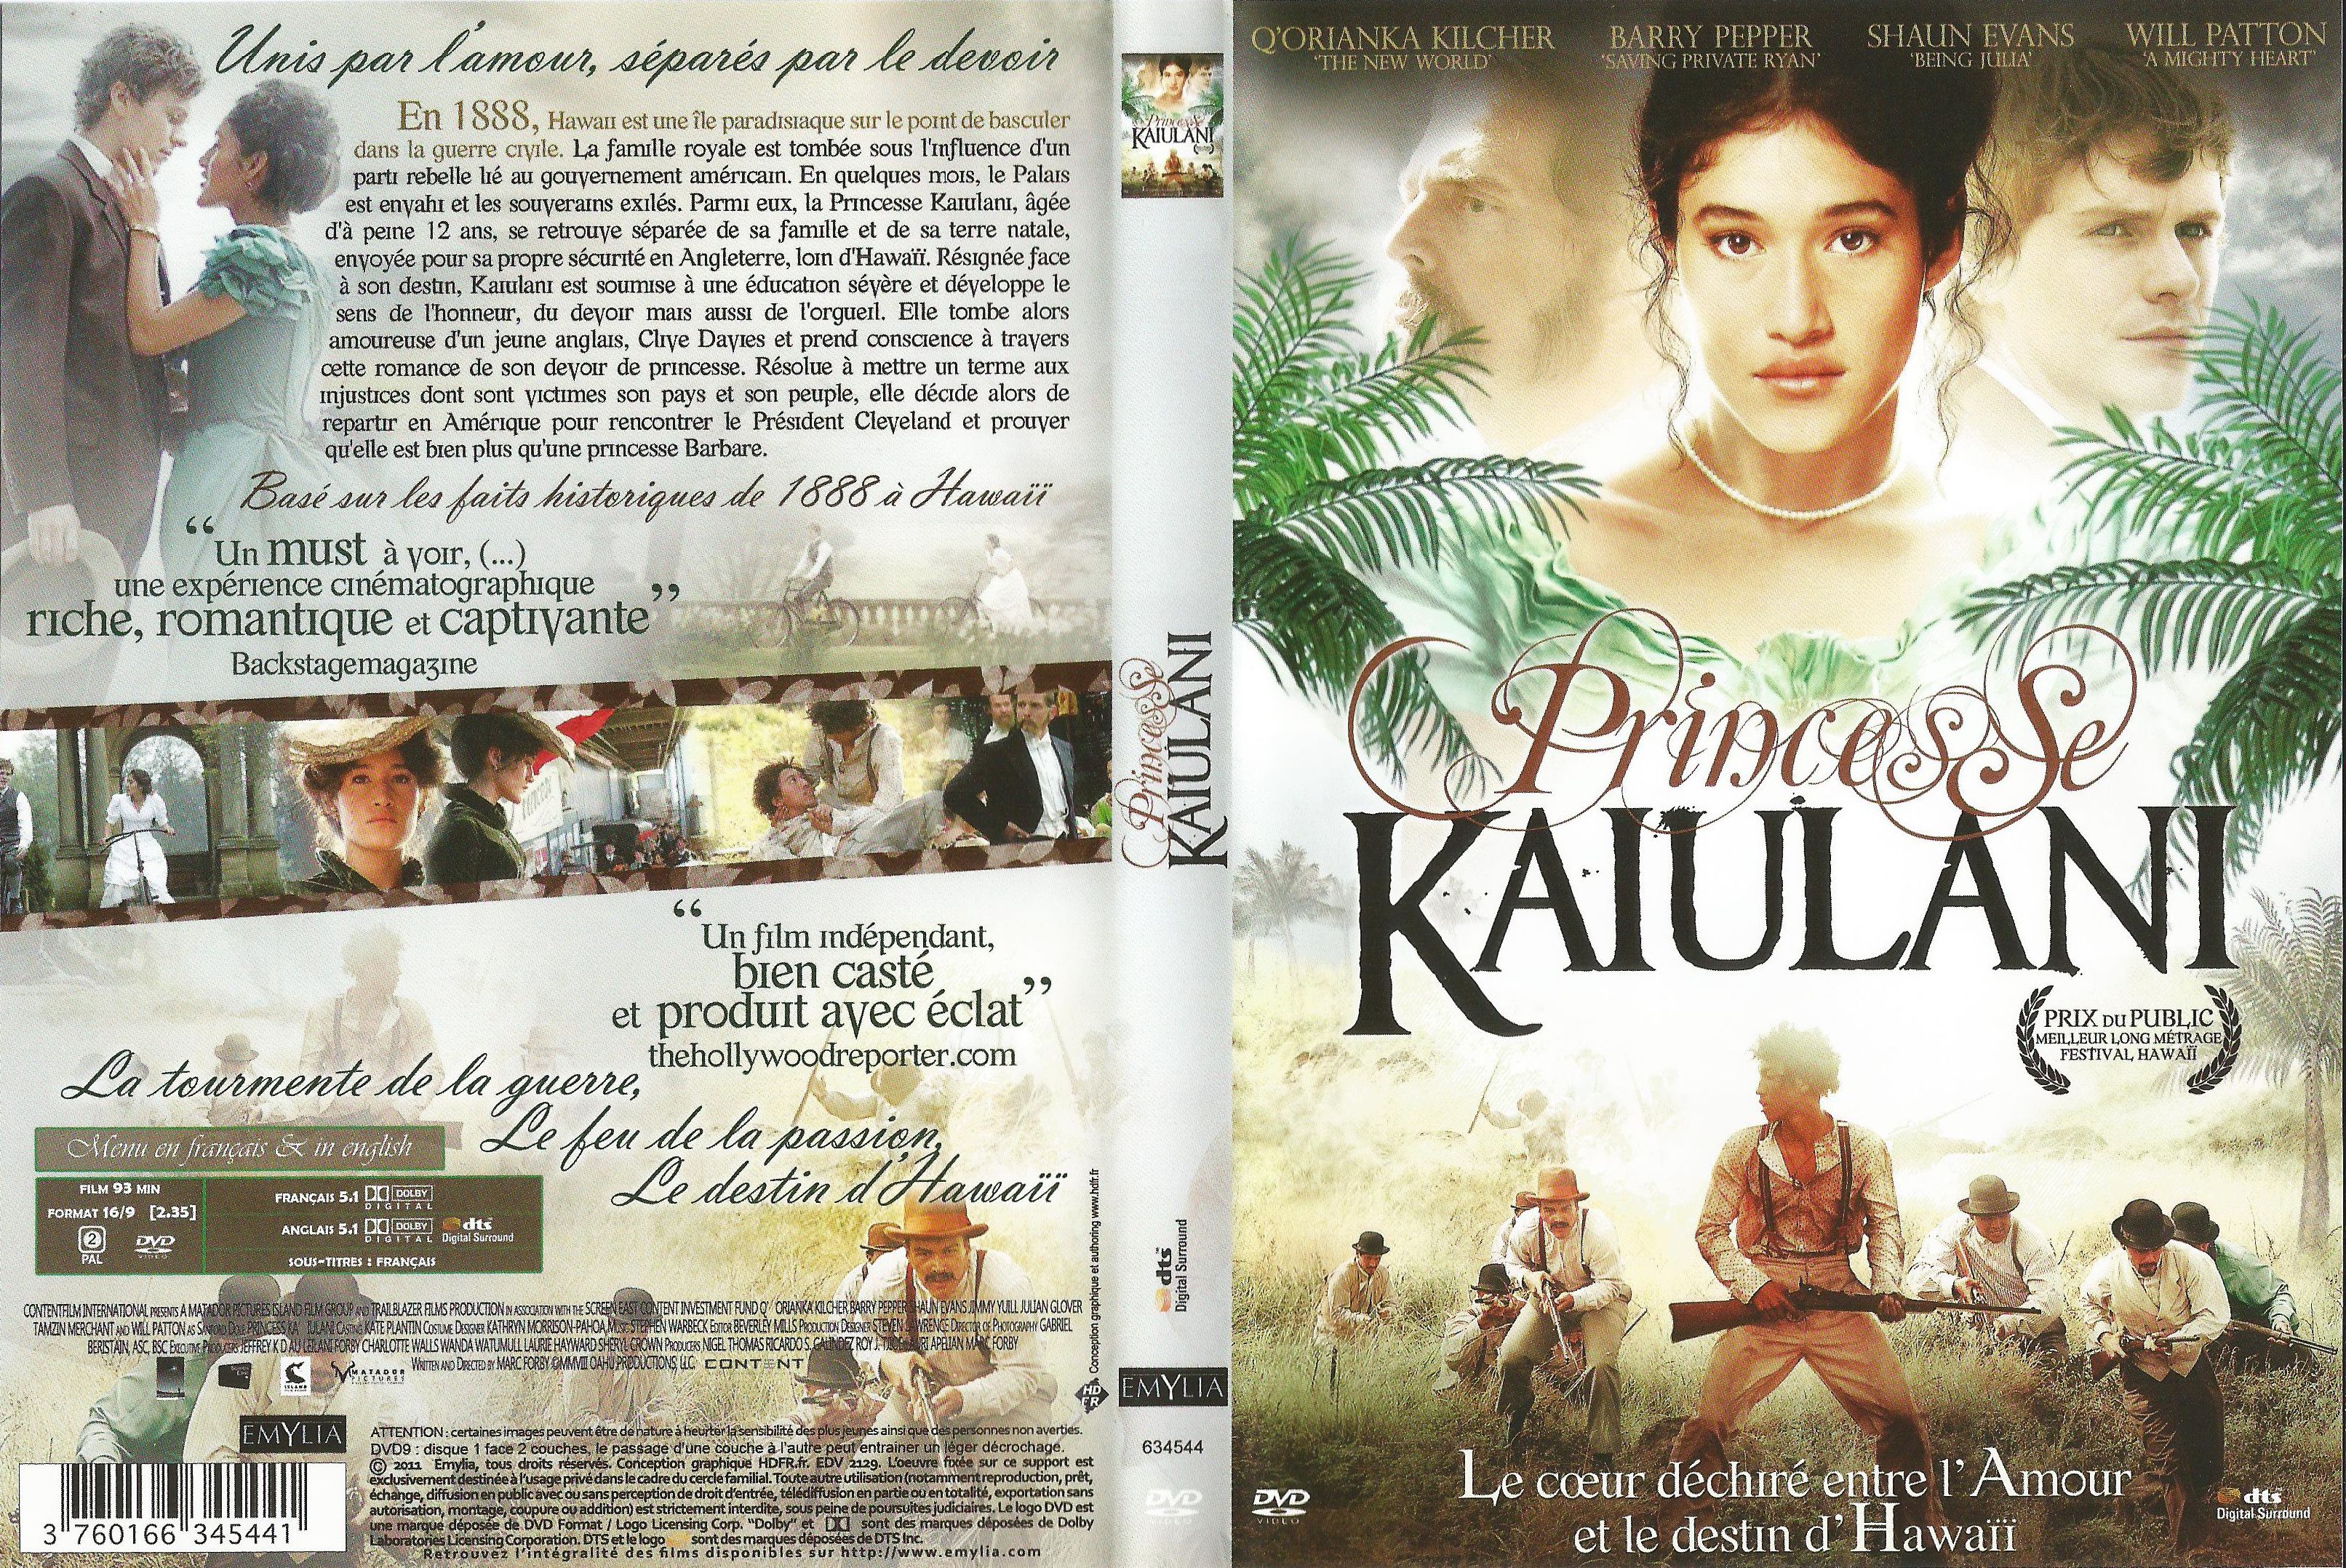 Jaquette DVD Princesse Kaiulani